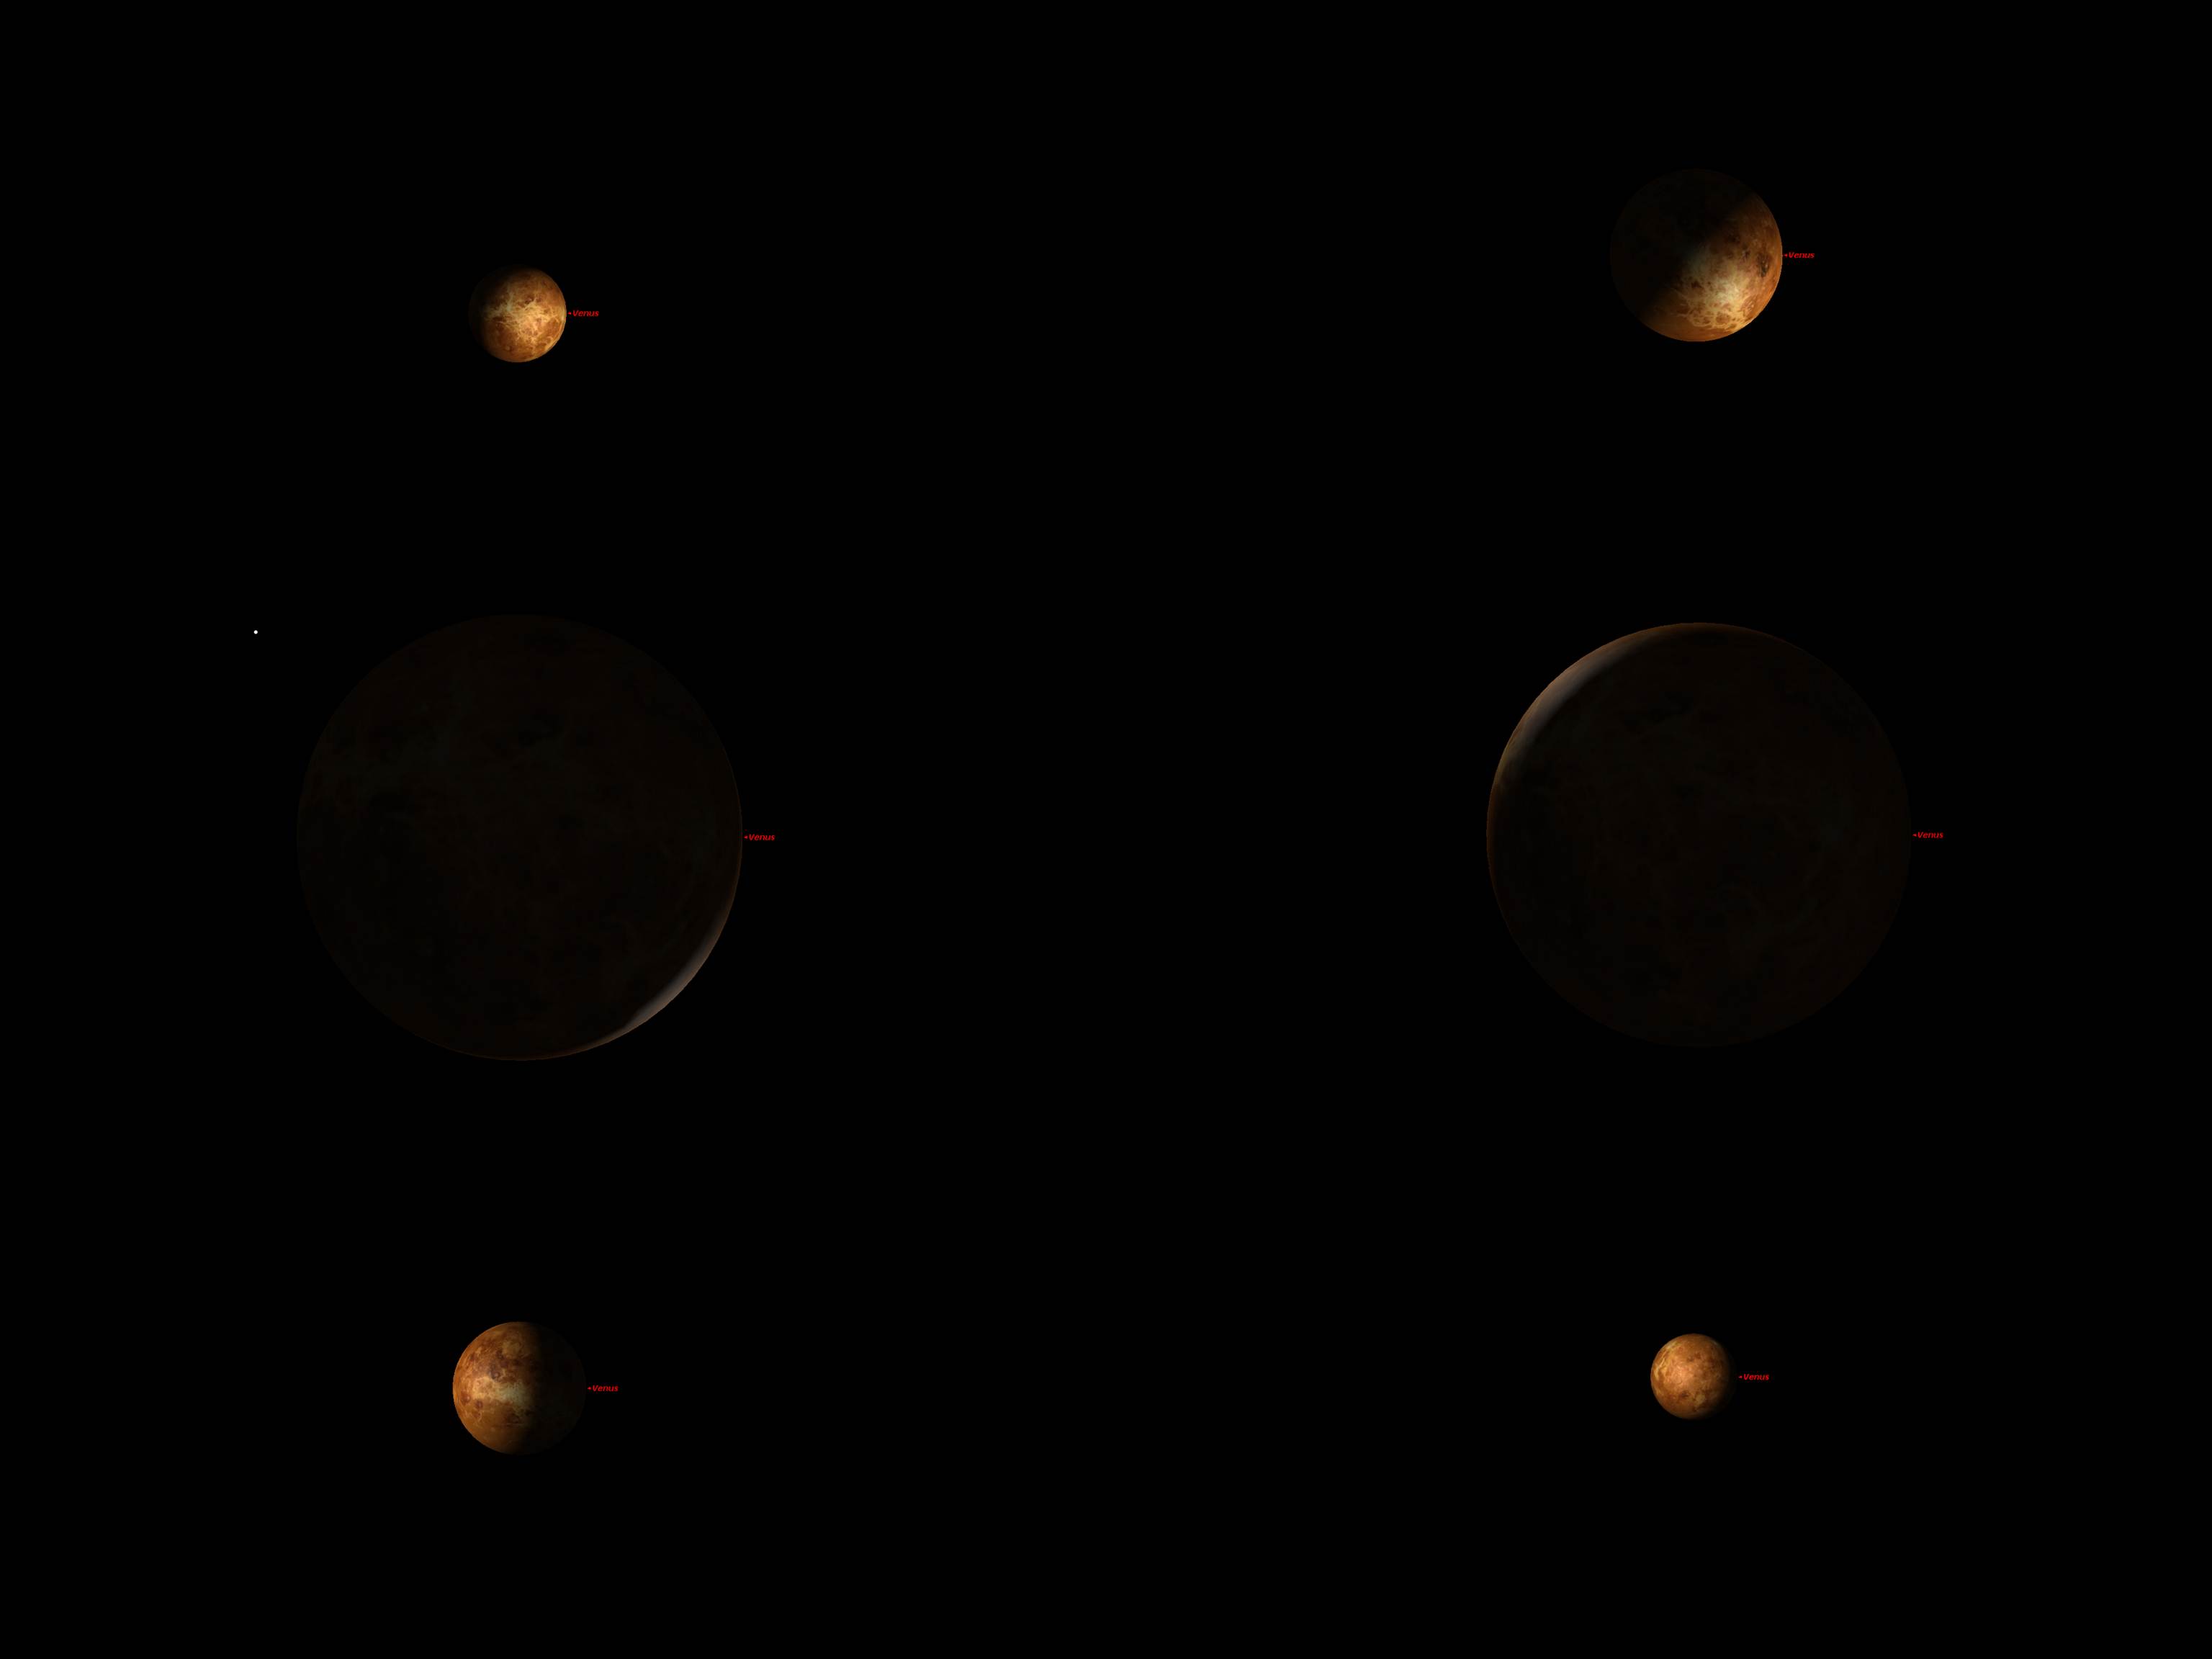 Fasene til Venus det kommende året. Øverst til venstre 20. desember 2011, øverst til høyre 20. mars 2012, midten til venstre 29. mai 2012, midten til høyre 17. juni 2012, nederst til venstre 20. september 2012 og nederst til høyre 20. desember 2012.  Illustrasjon: www.astroevents.no / Knut Jørgen Røed Ødegaard